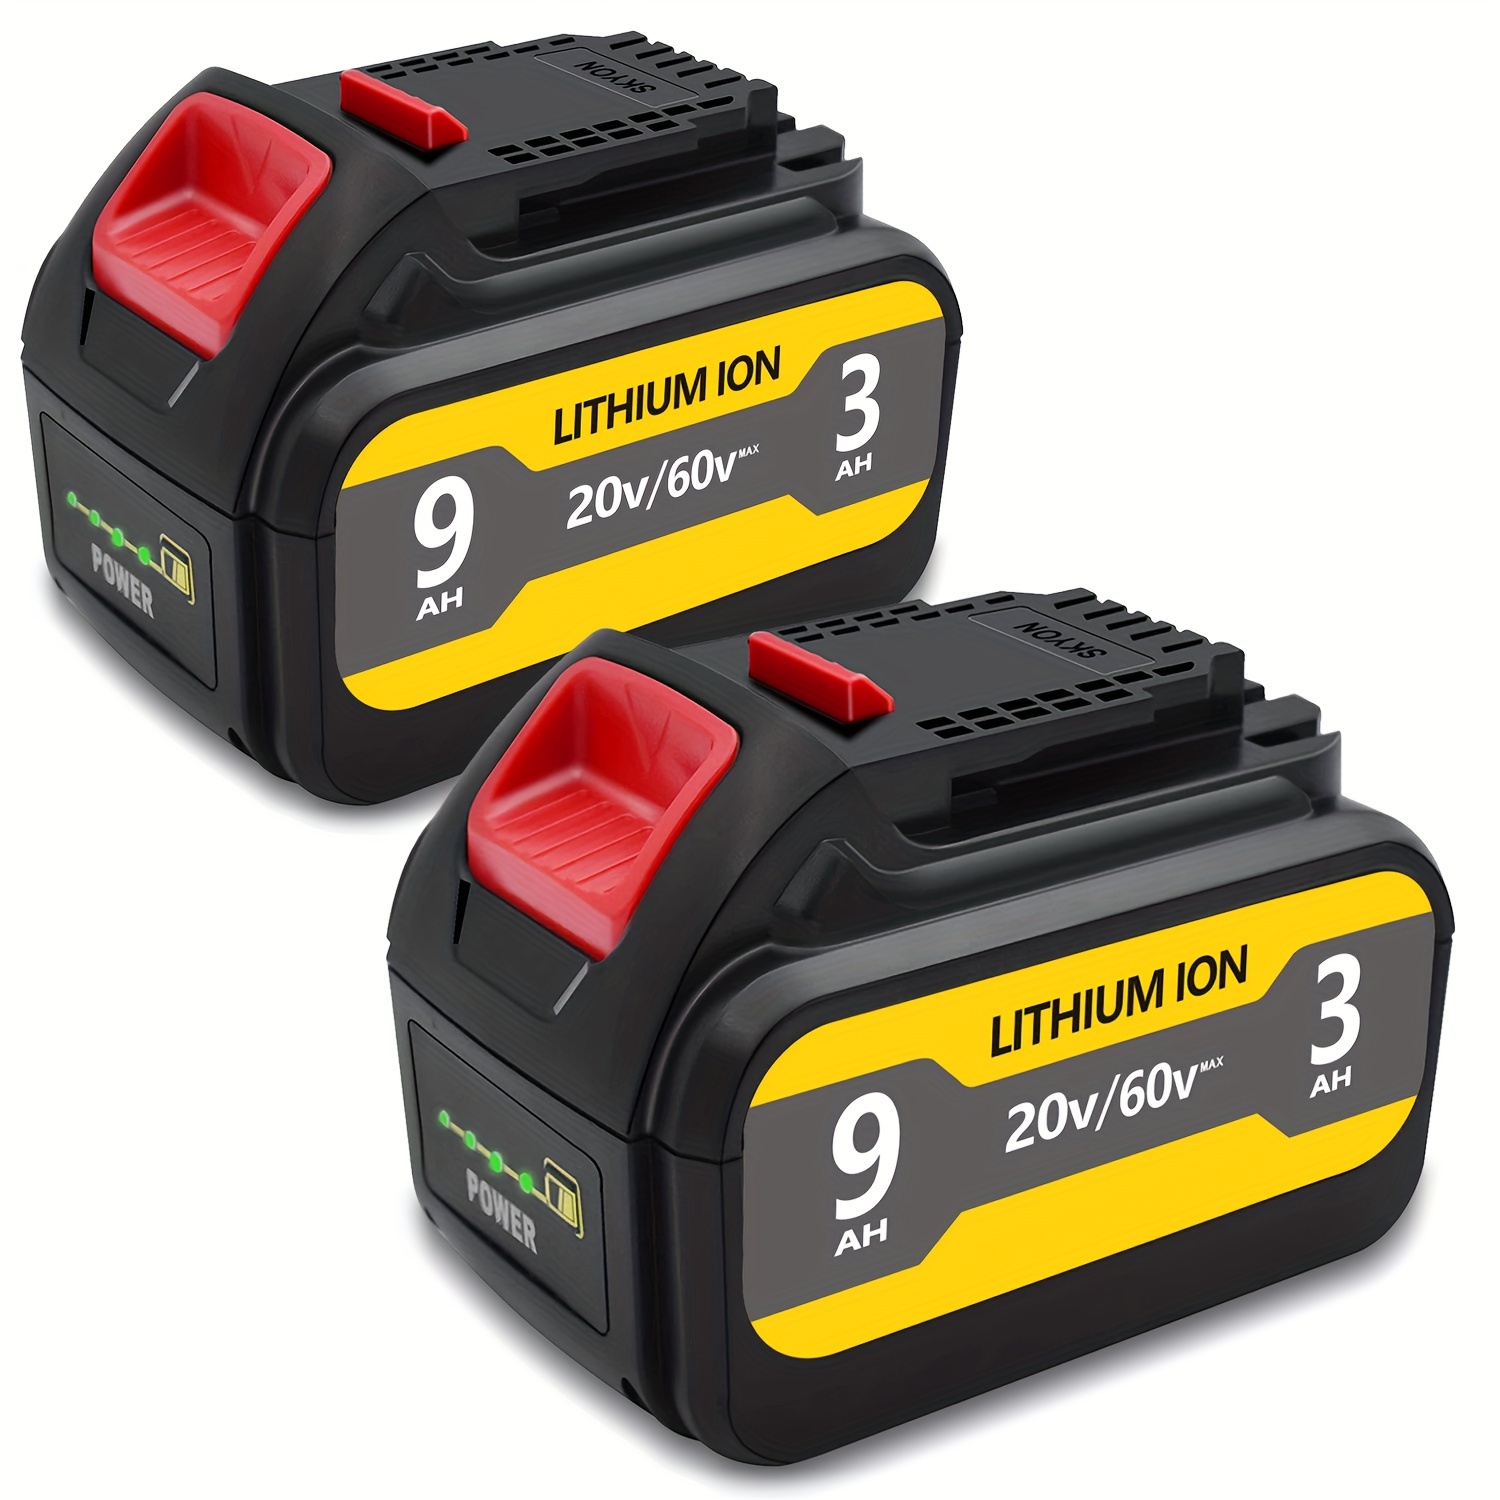 

Dcb609-2 9ah 20v/60v Battery Replacement For Dcb606-2 6ah Dcb609-2 9ah Dcb612-2 12ah Dcb615-2 15ah 20v 60v Max* Lithium-ion Battery Compatible With 20v 60v Power Tools 2 Pack